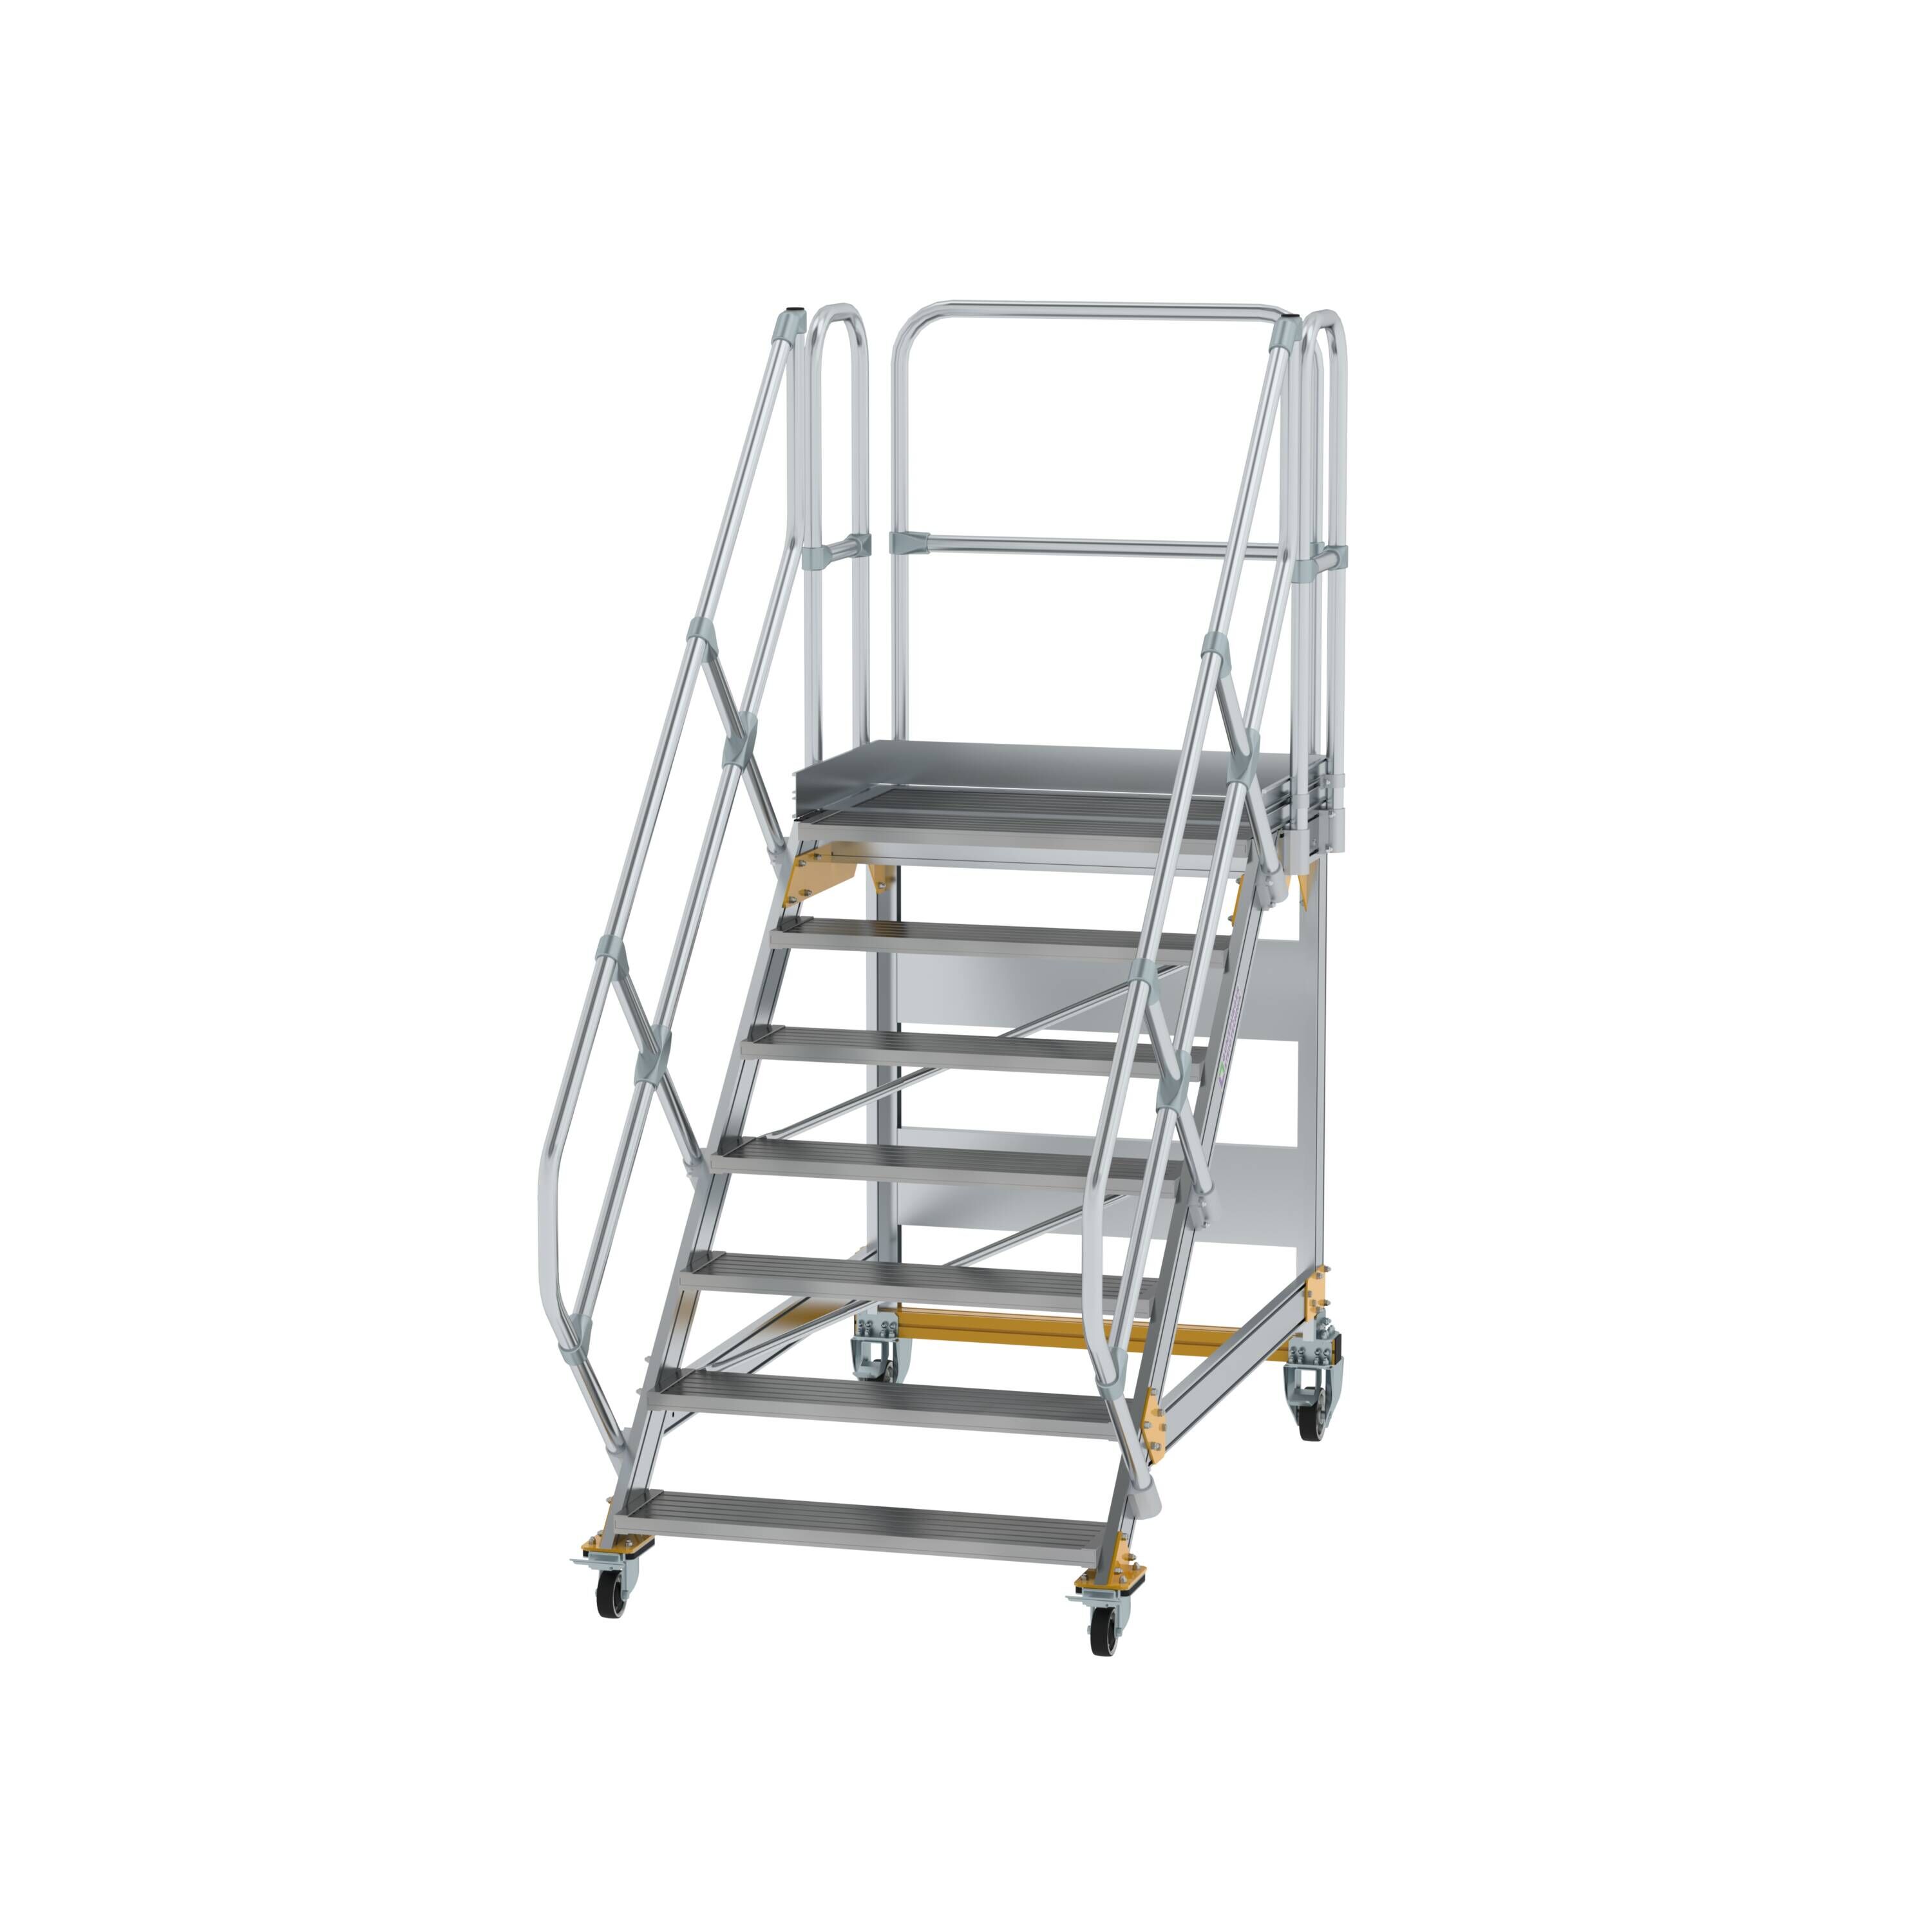 Plattformtreppe 45° fahrbar Stufenbreite 1000mm 7 Stufen Aluminium geriffelt